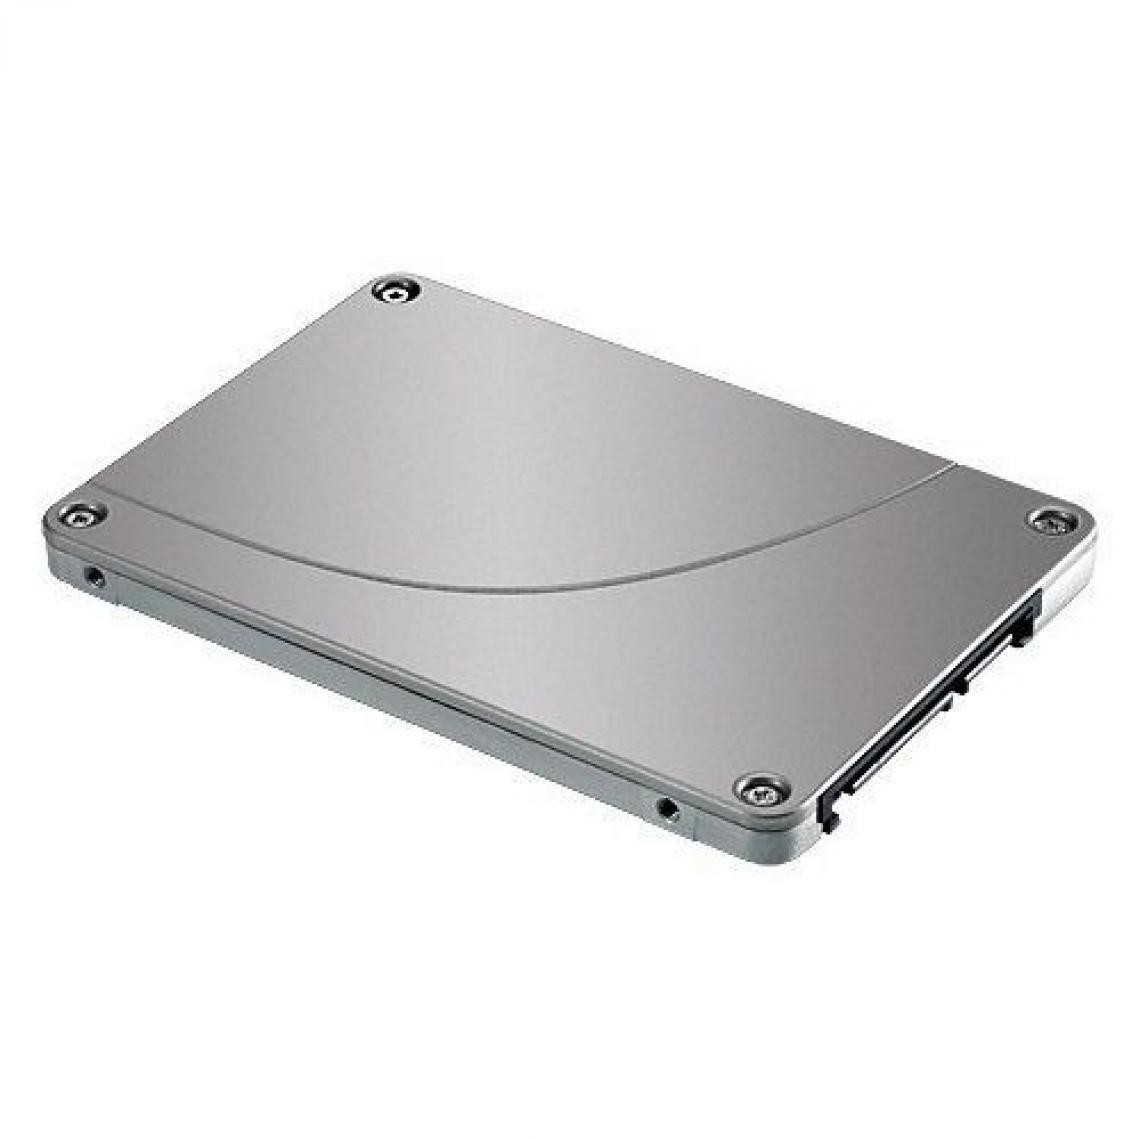 Hp - HP G7U67AA Disque Flash SSD Interne 256 Go SATA - SSD Interne